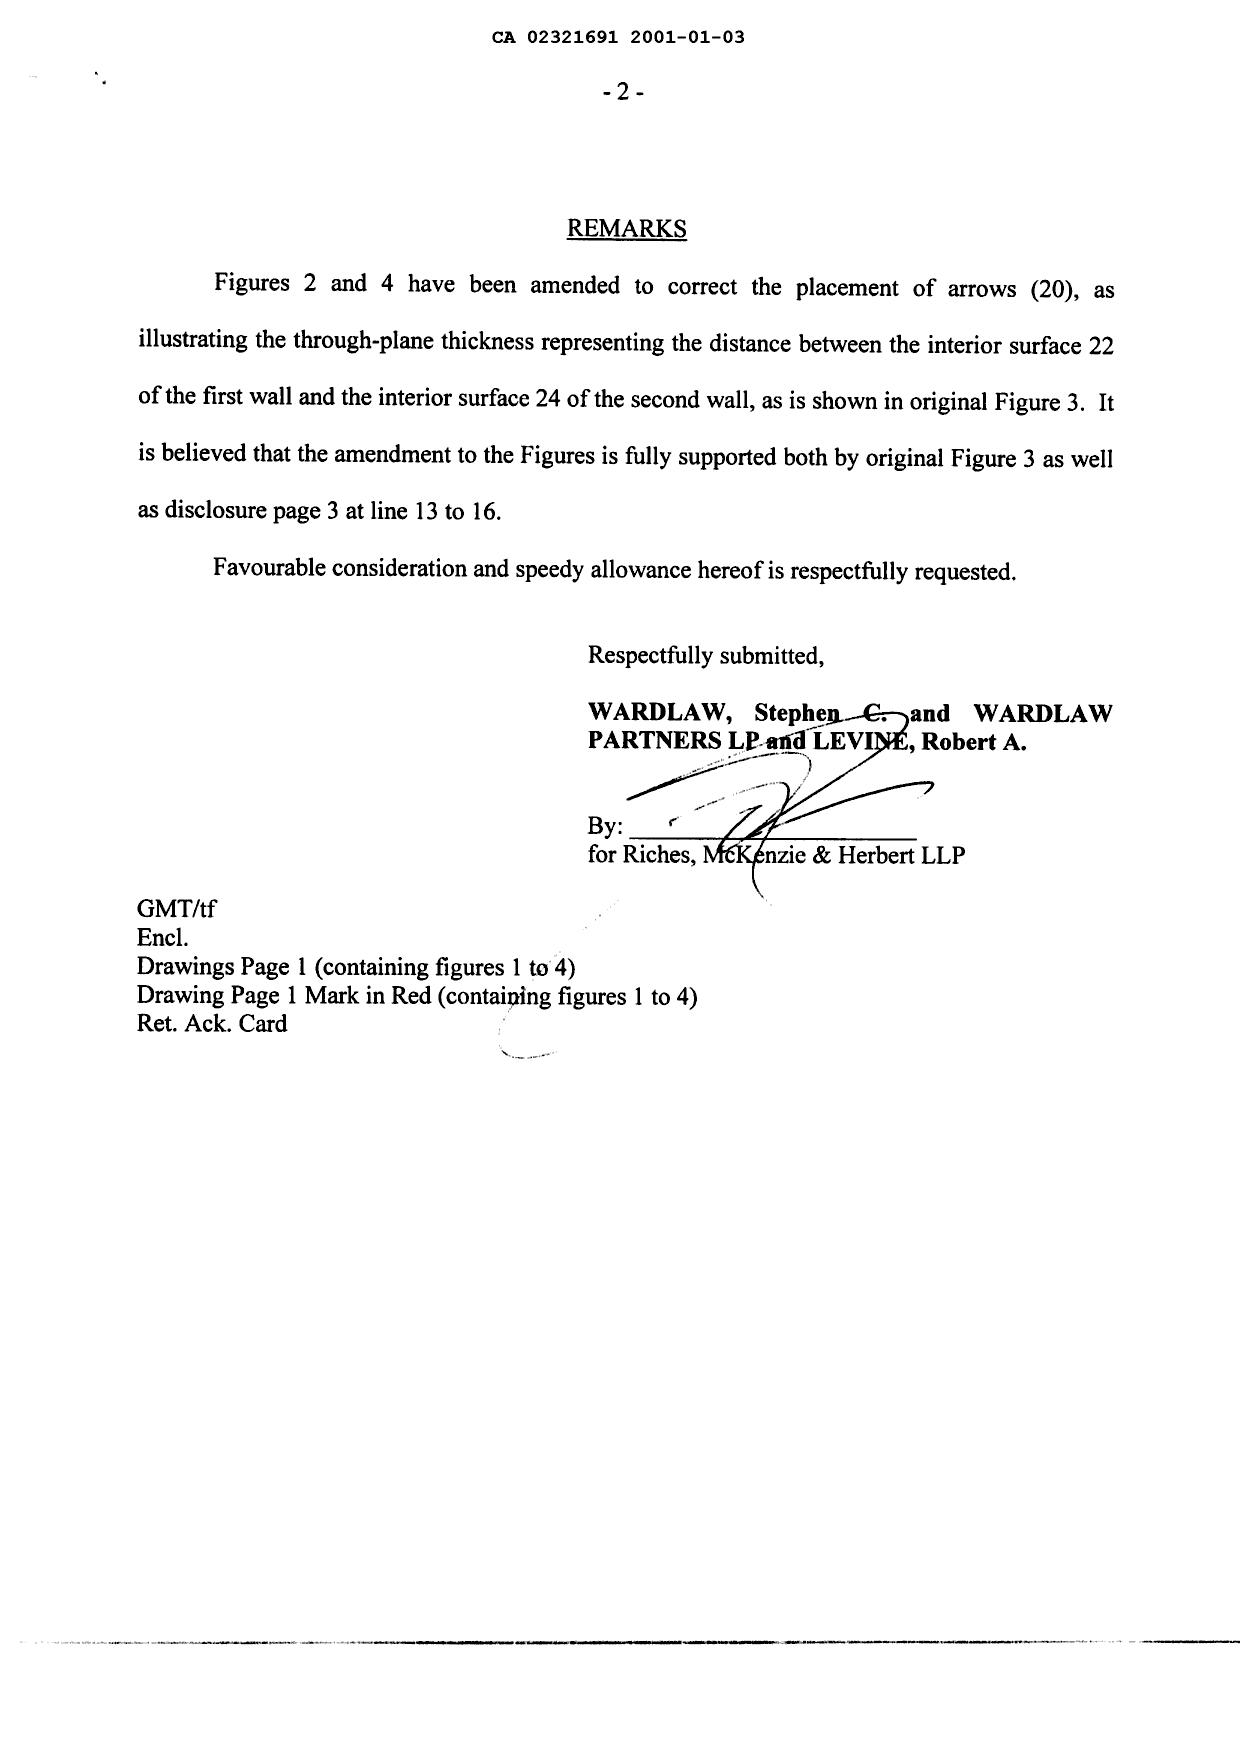 Canadian Patent Document 2321691. Prosecution-Amendment 20001203. Image 2 of 4